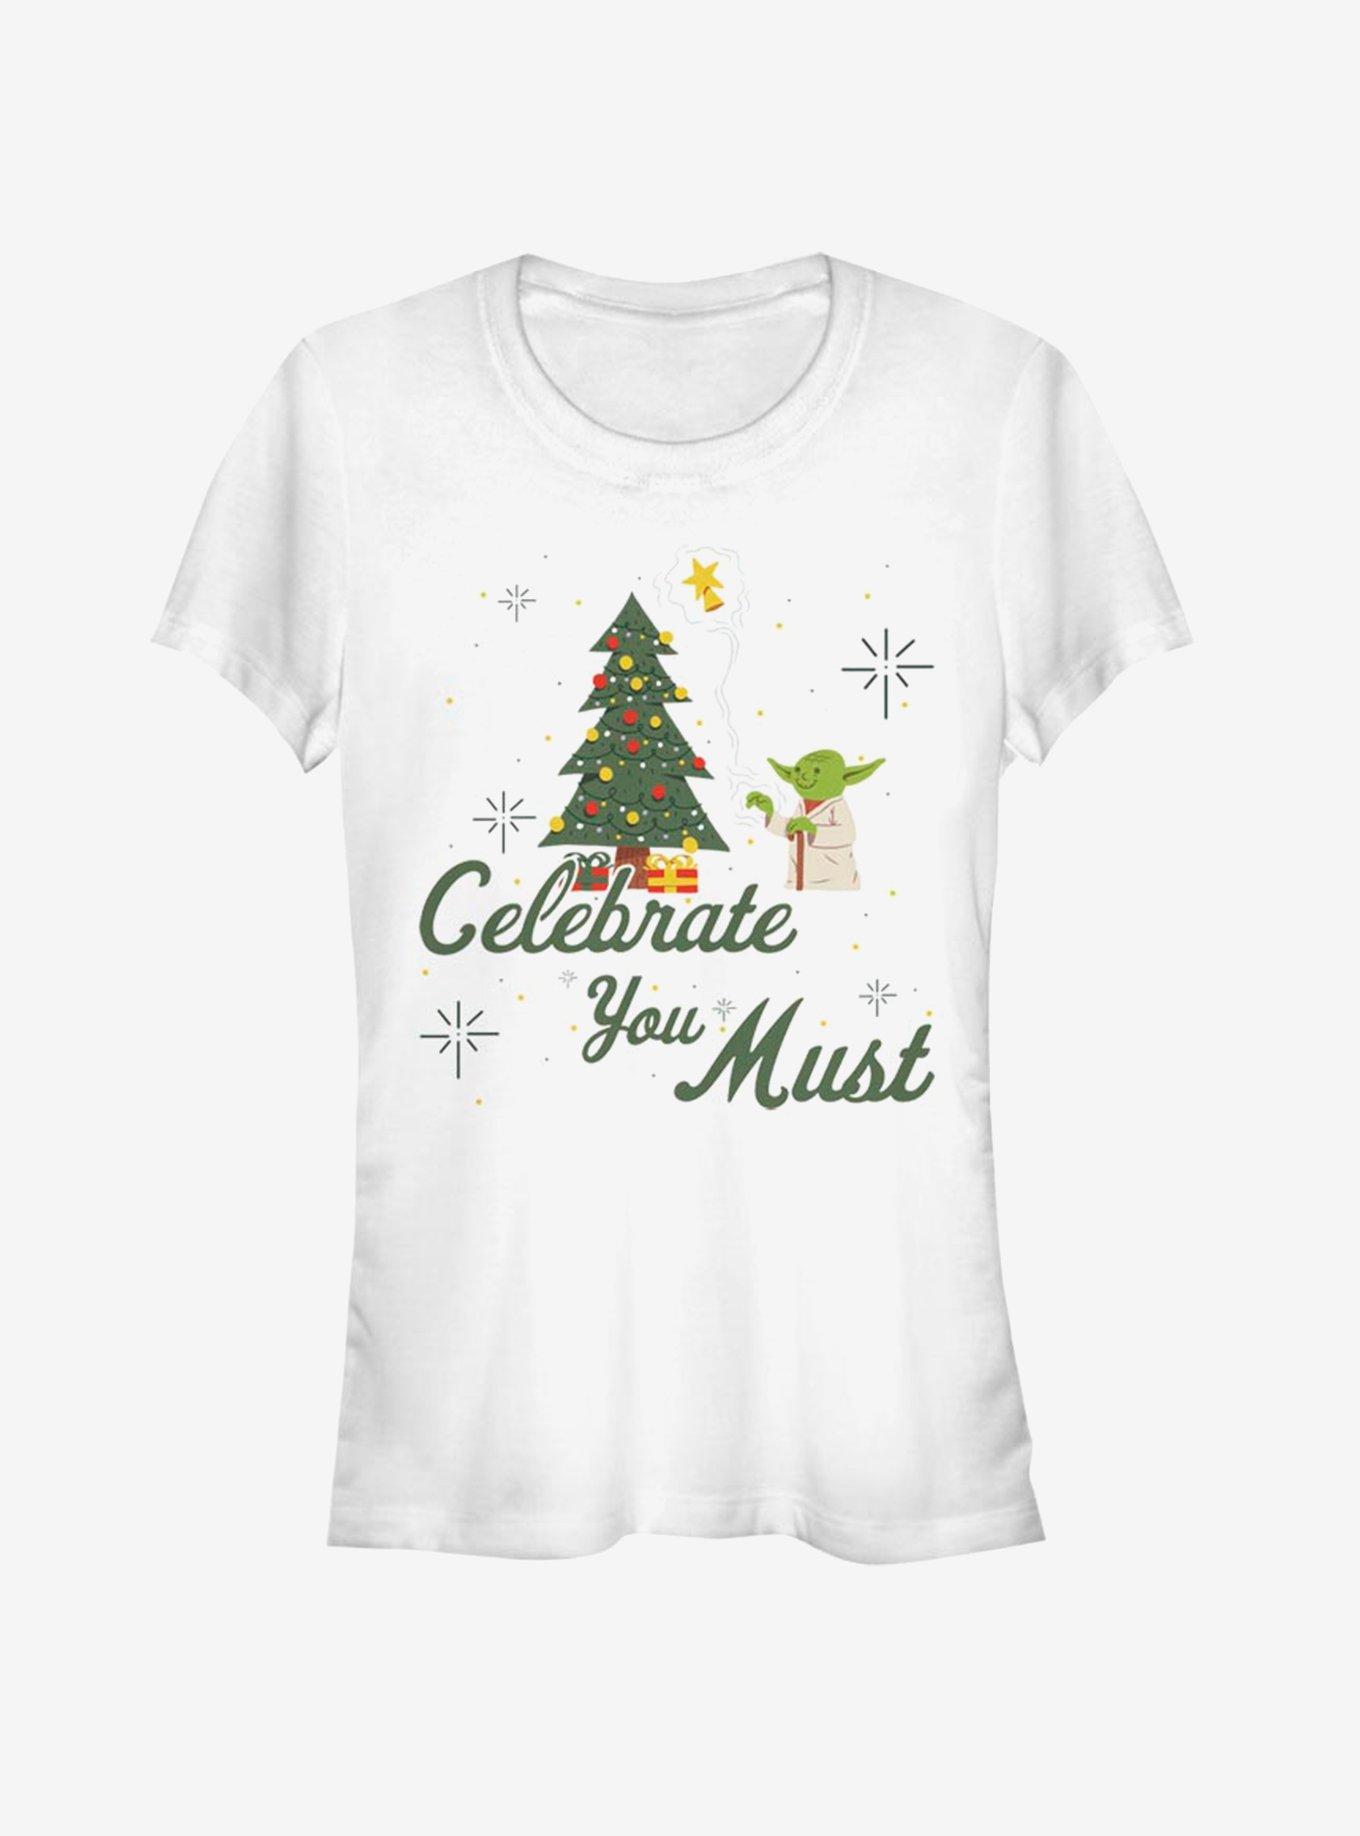 Star Wars Yoda Celebrate You Must Christmas Girls T-Shirt, WHITE, hi-res